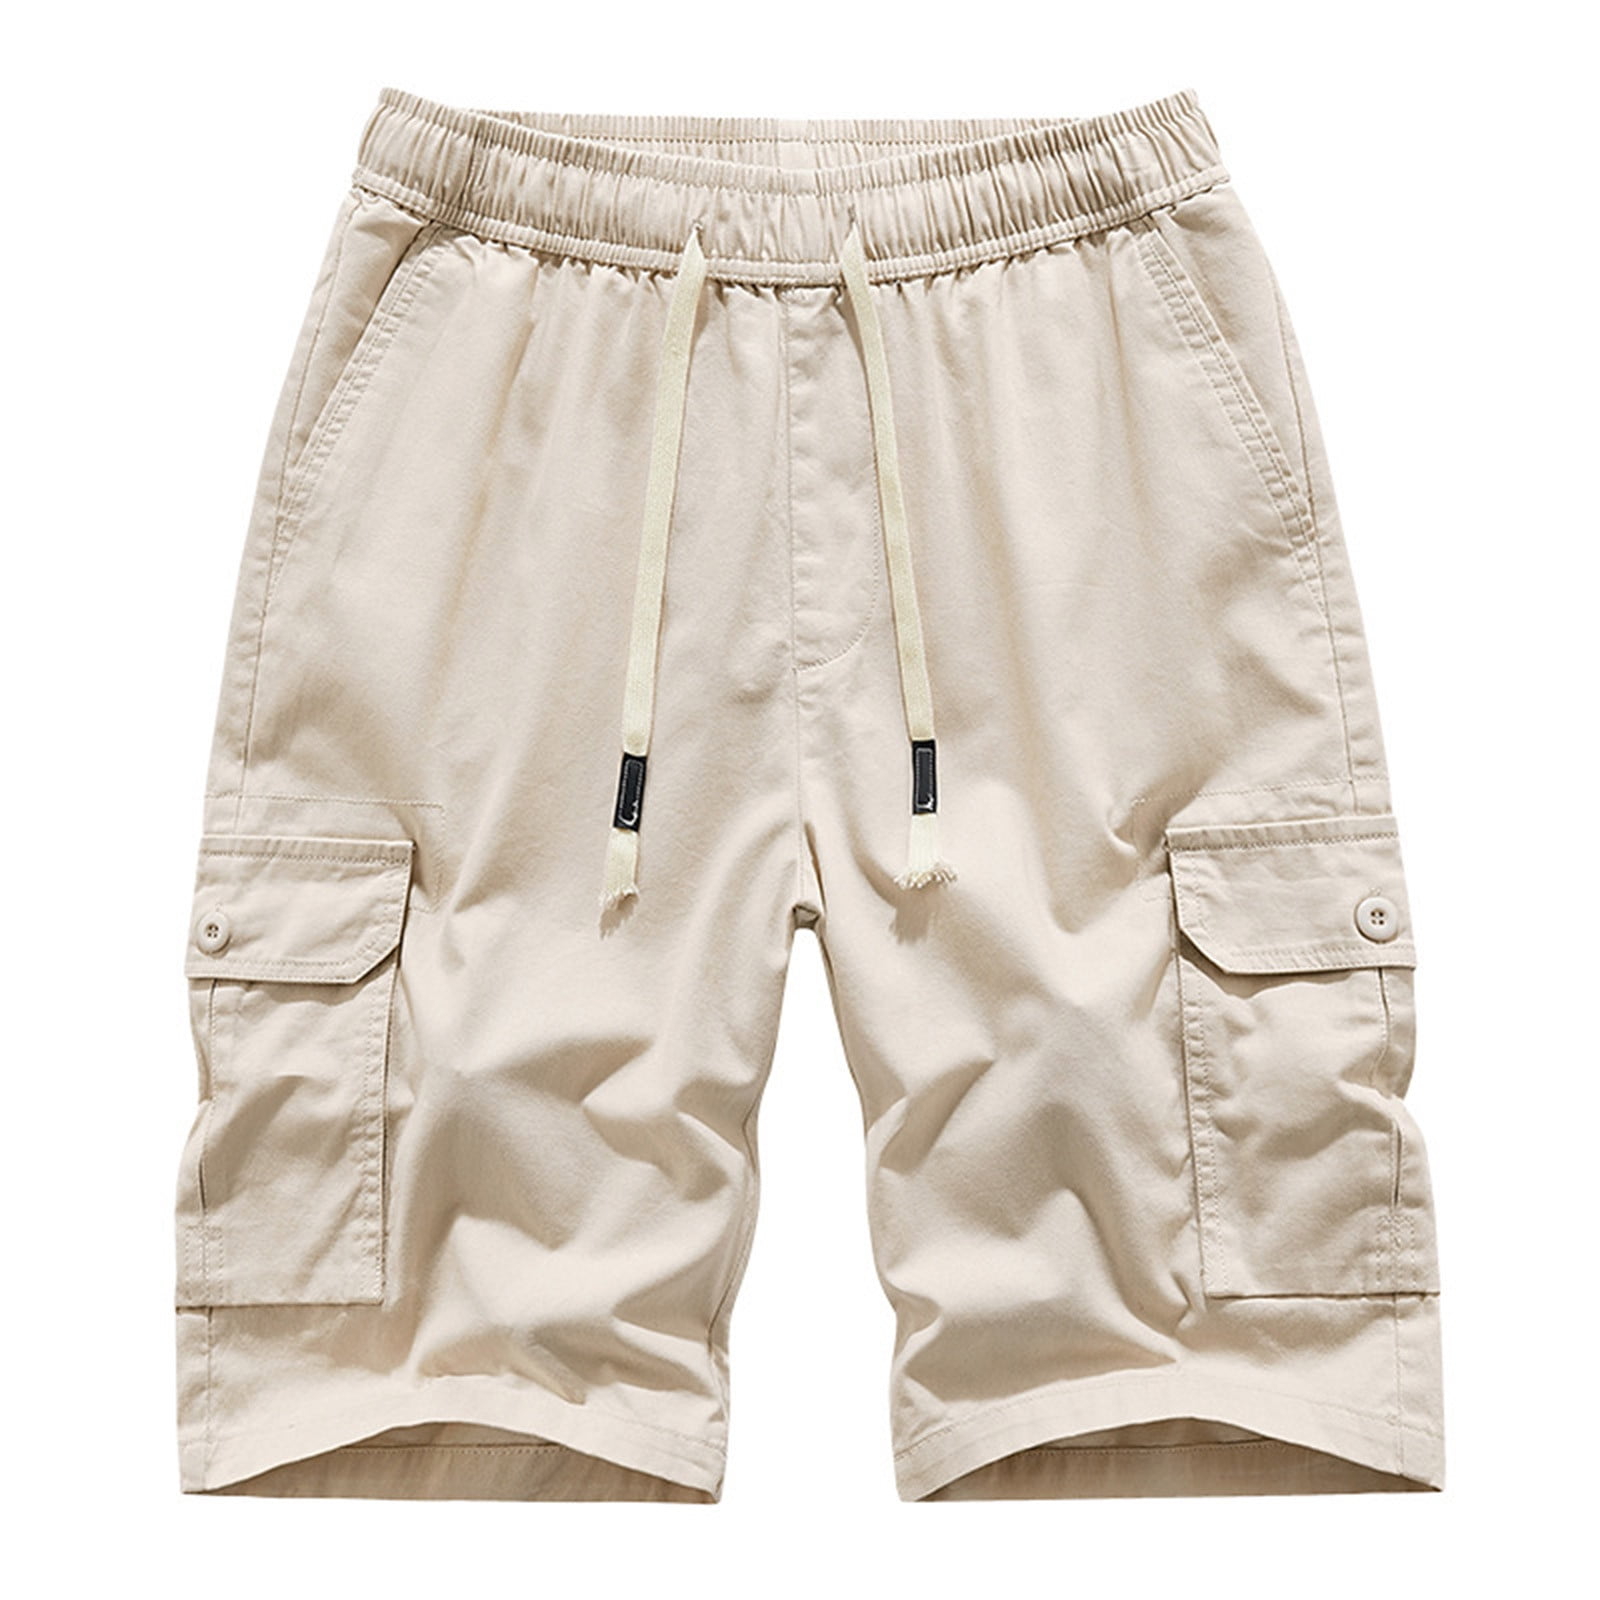 Reduce Price RYRJJ Men's Cargo Shorts Elastic Waist Drawstring Cotton  Summer Casual Outdoor Lightweight Multi-Pocket Work Short Pants(White,S) 